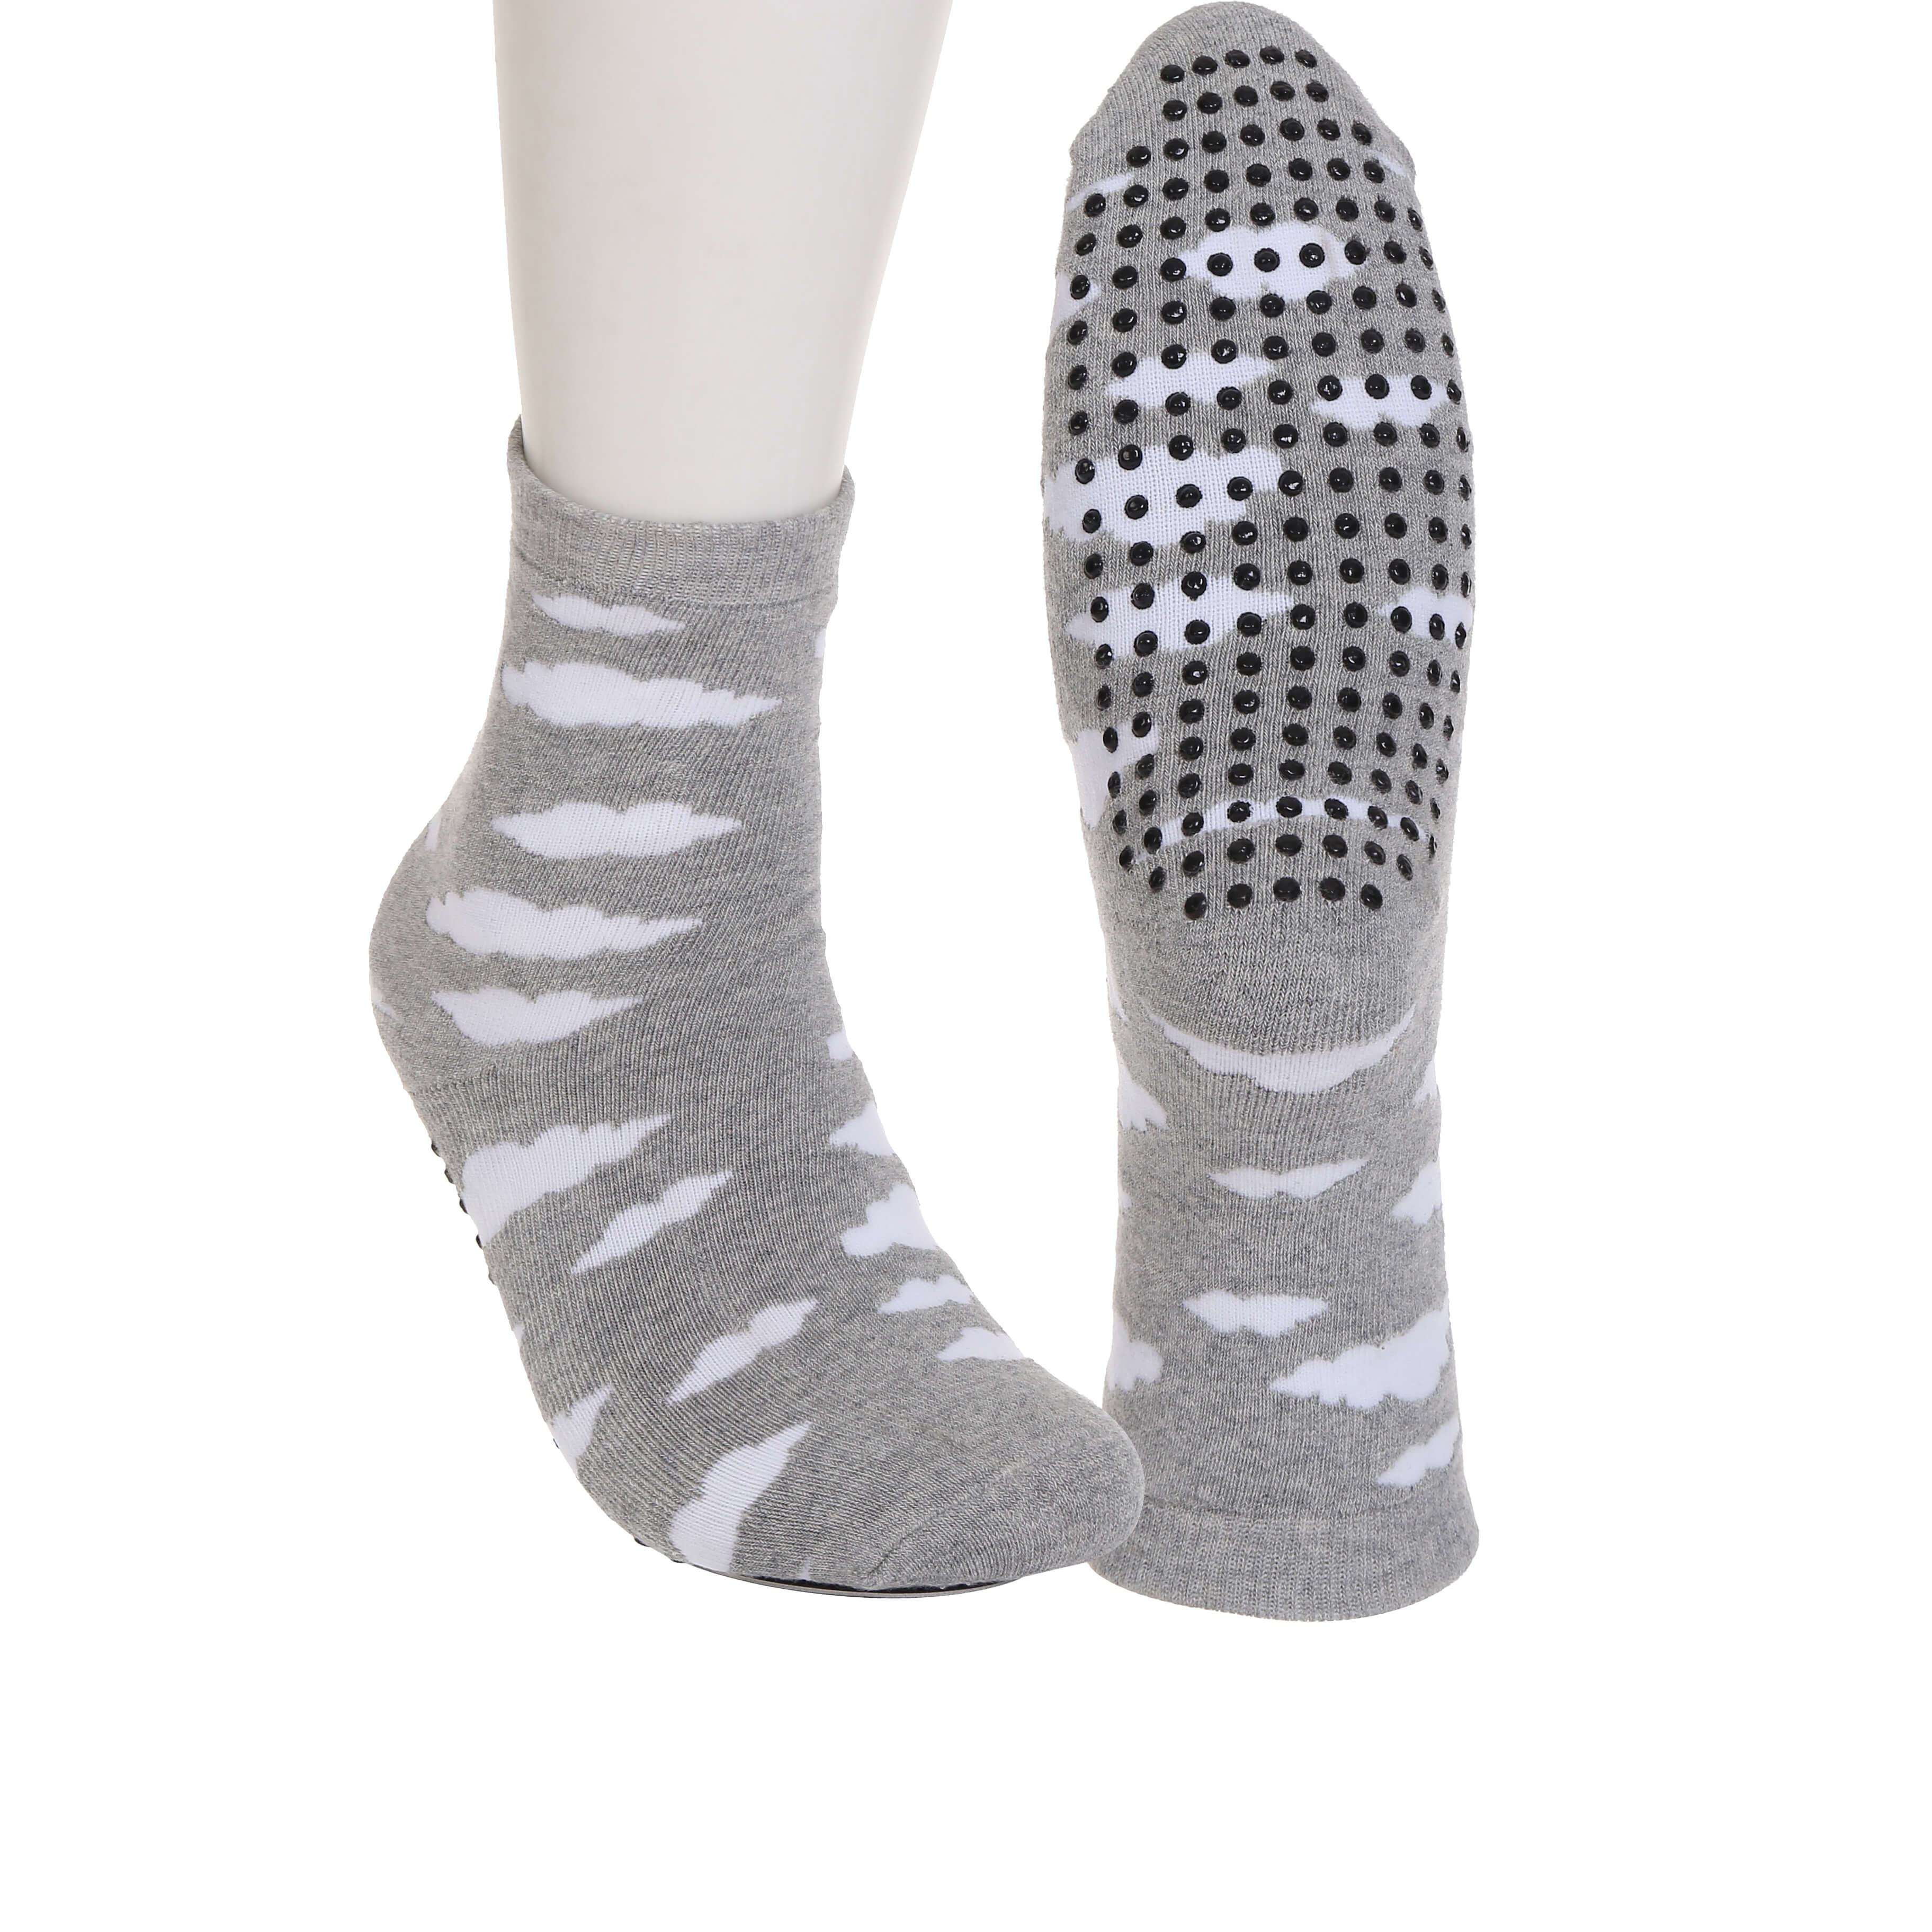 Bespoke Non Slip Socks Yoga Socks Cloud Print Design Trampoline Socks Featured Image